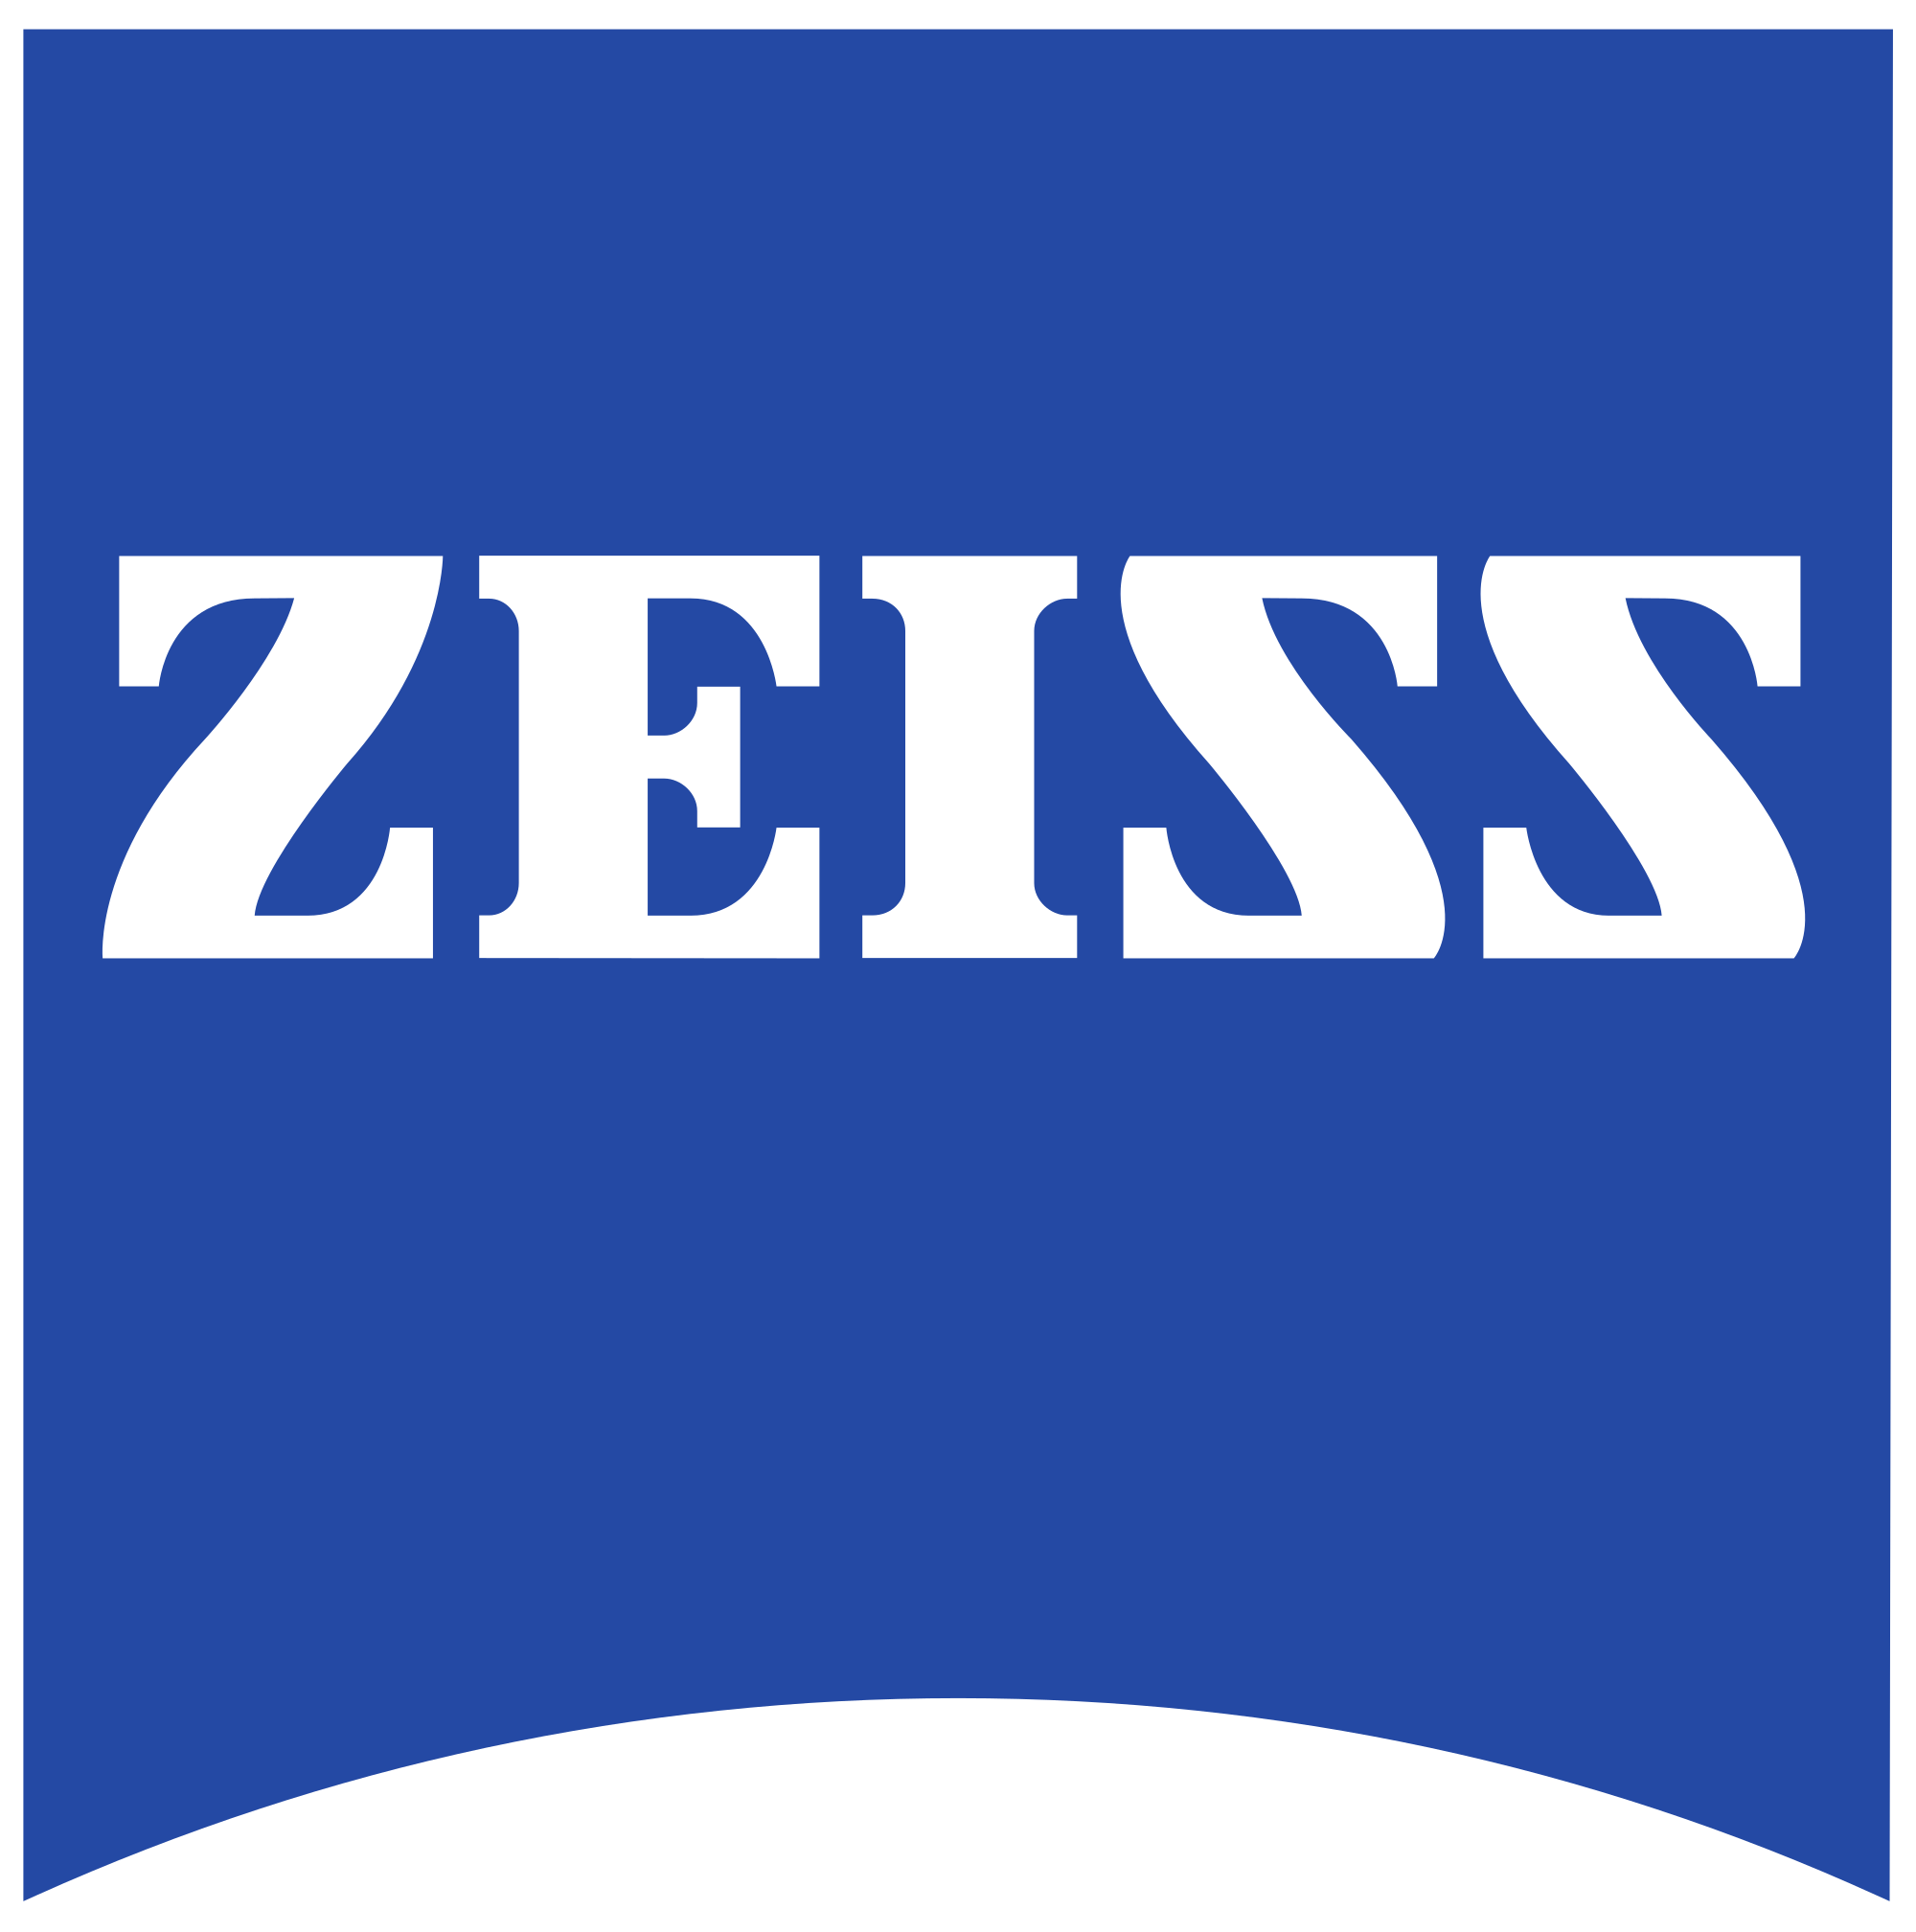 2000px-Zeiss_logo.svg